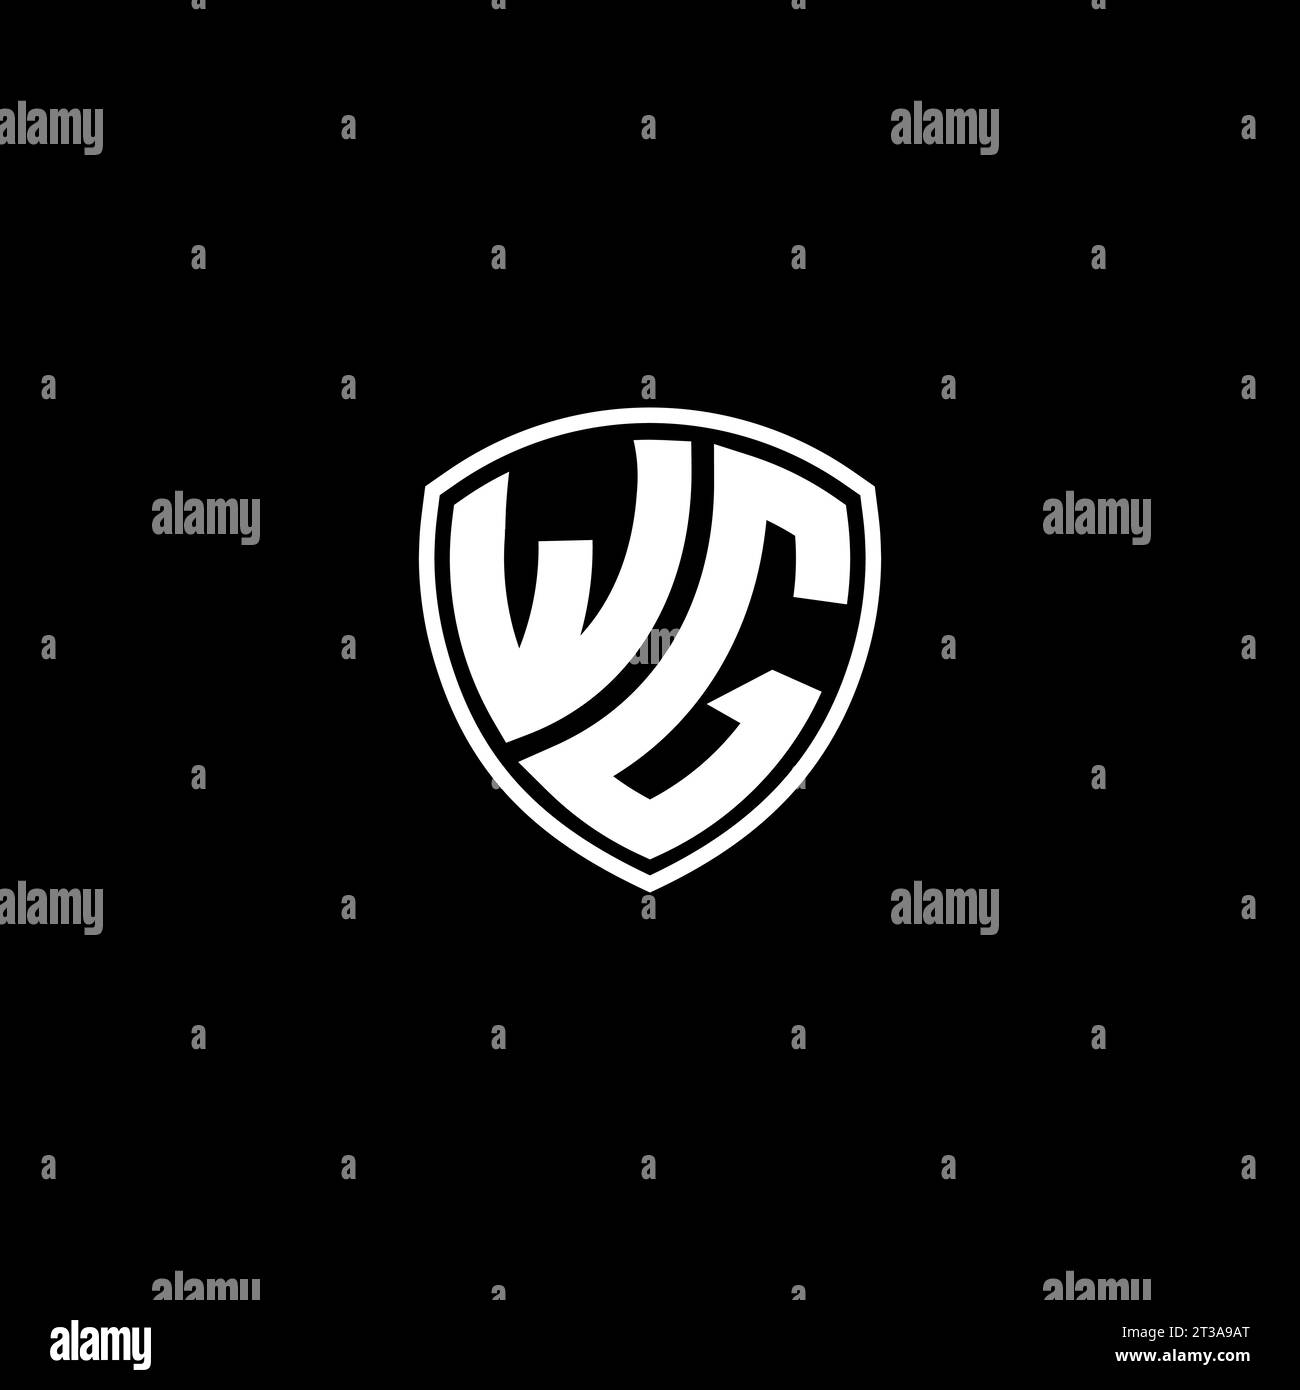 WG logo monogram emblem style with shield shape design template ideas Stock Vector